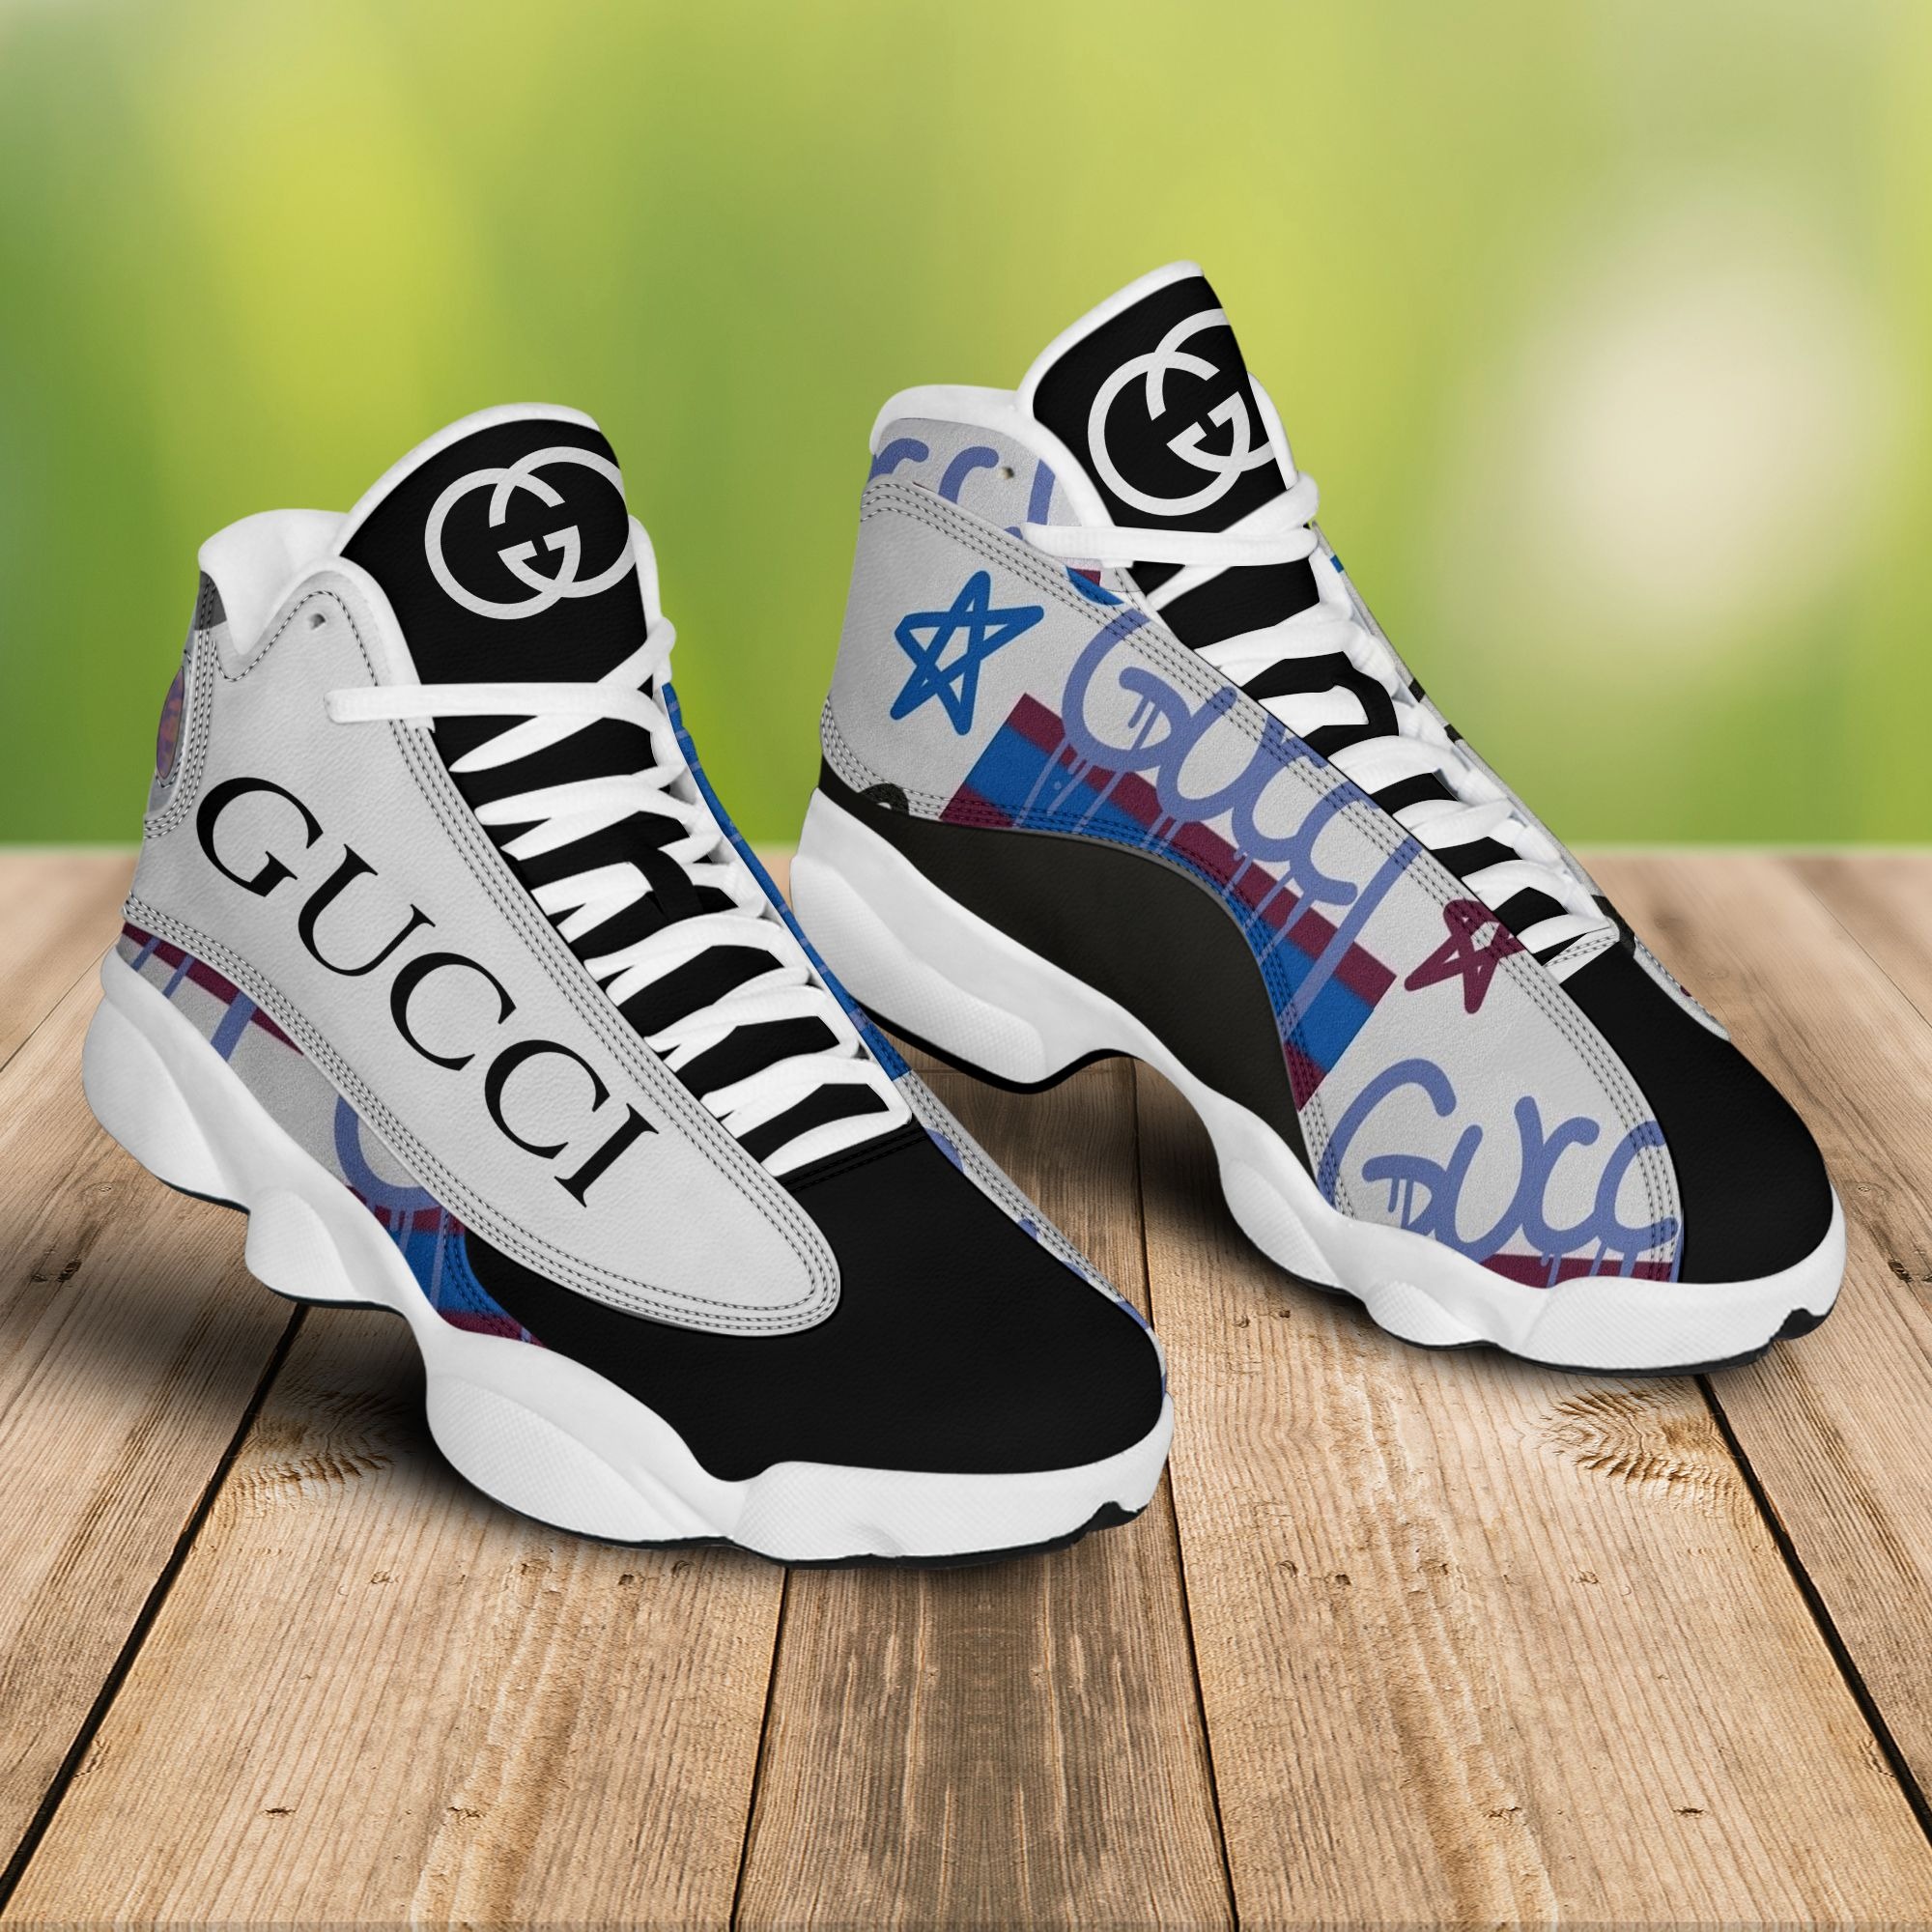 Gucci Air Jordan 13 Trending Fashion Sneakers Luxury Shoes